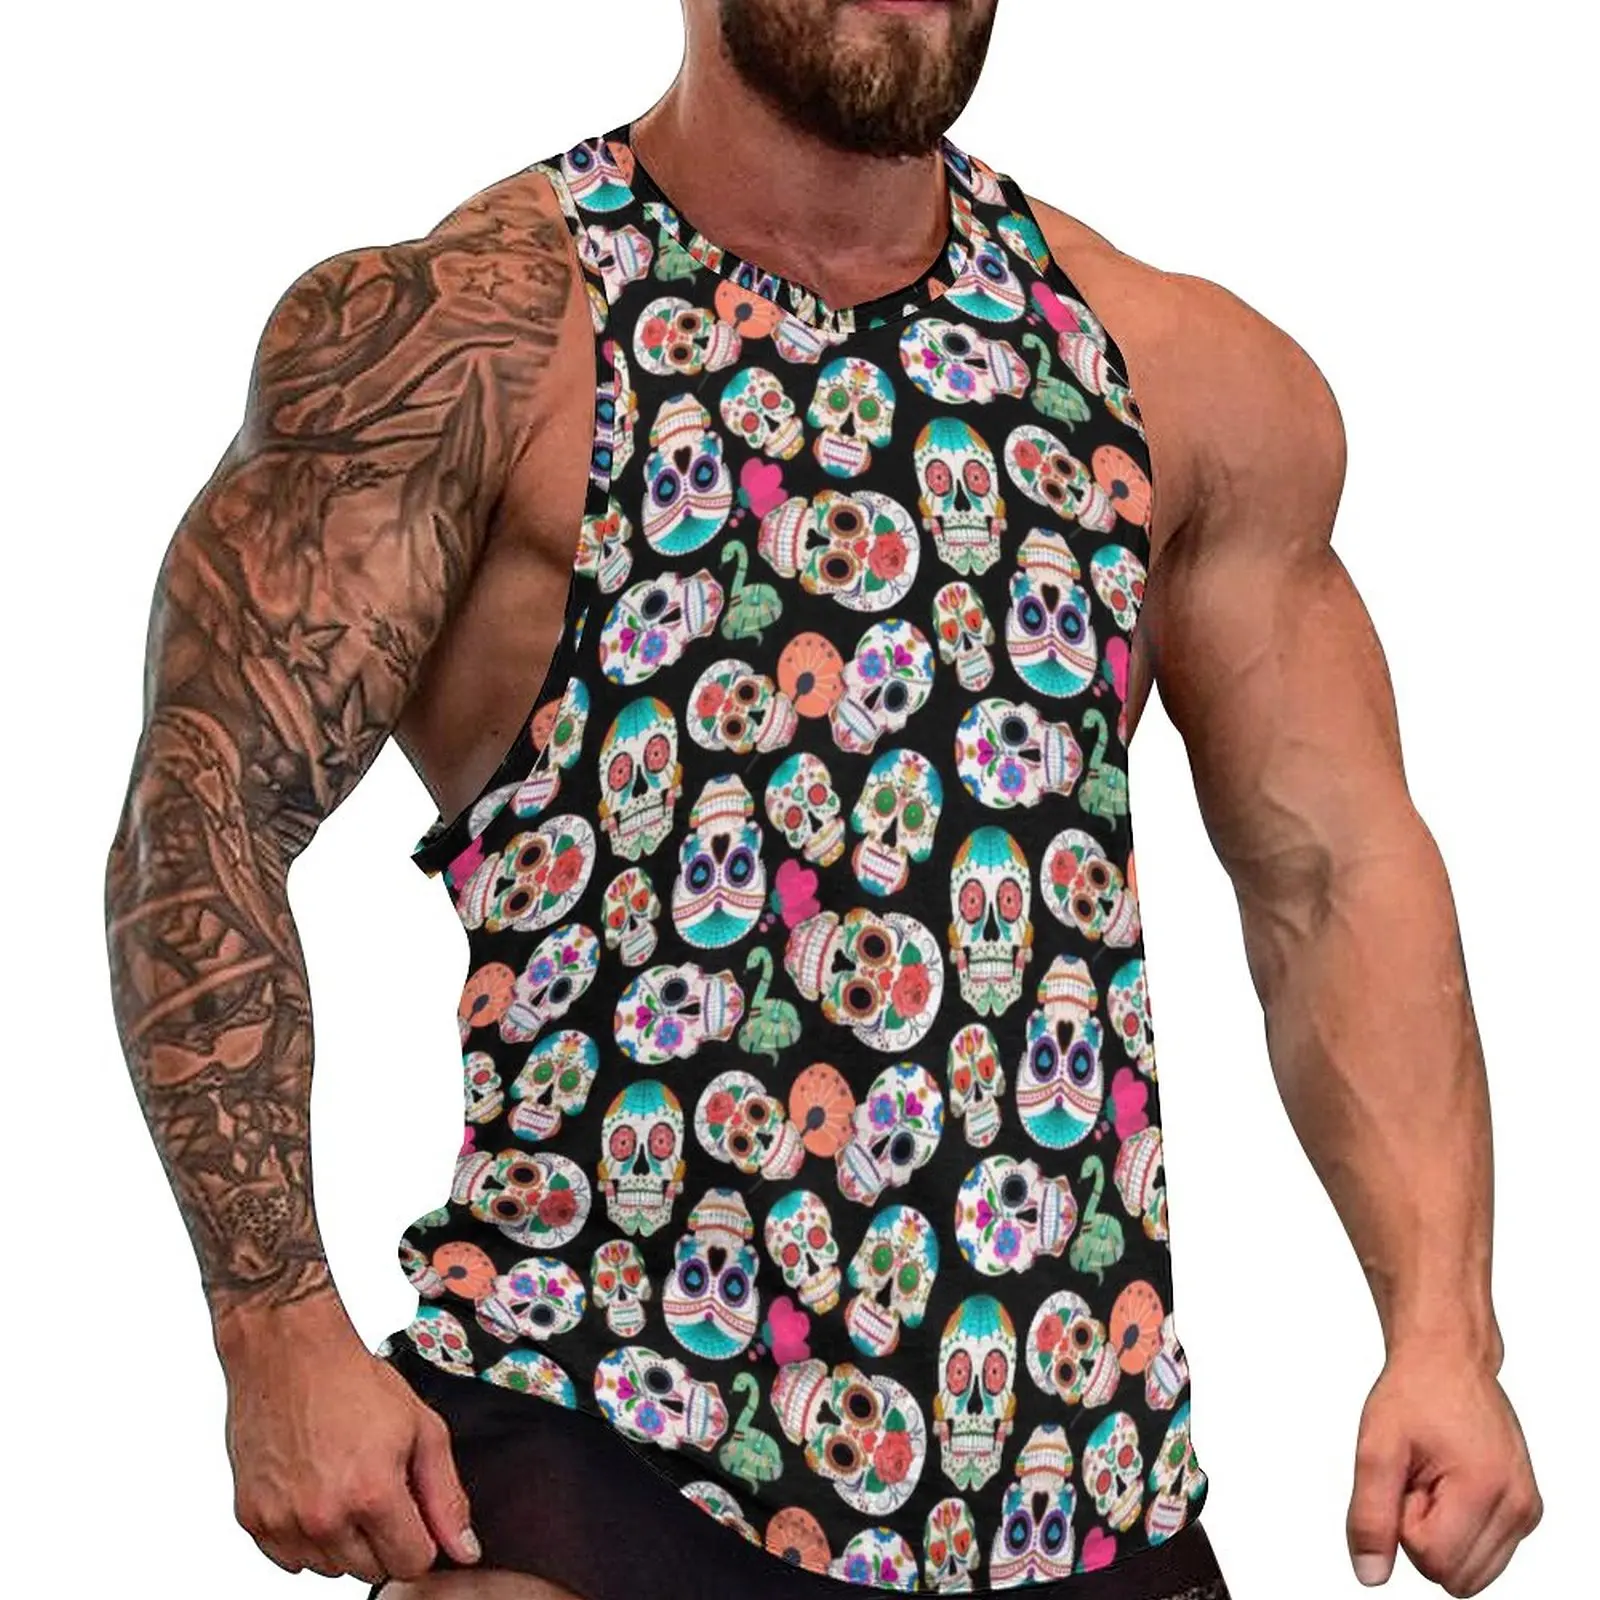 

Trendy Floral Skull Tank Top Man's Colorful Sugar Skulls Tops Summer Printed Training Sportswear Oversize Sleeveless Vests